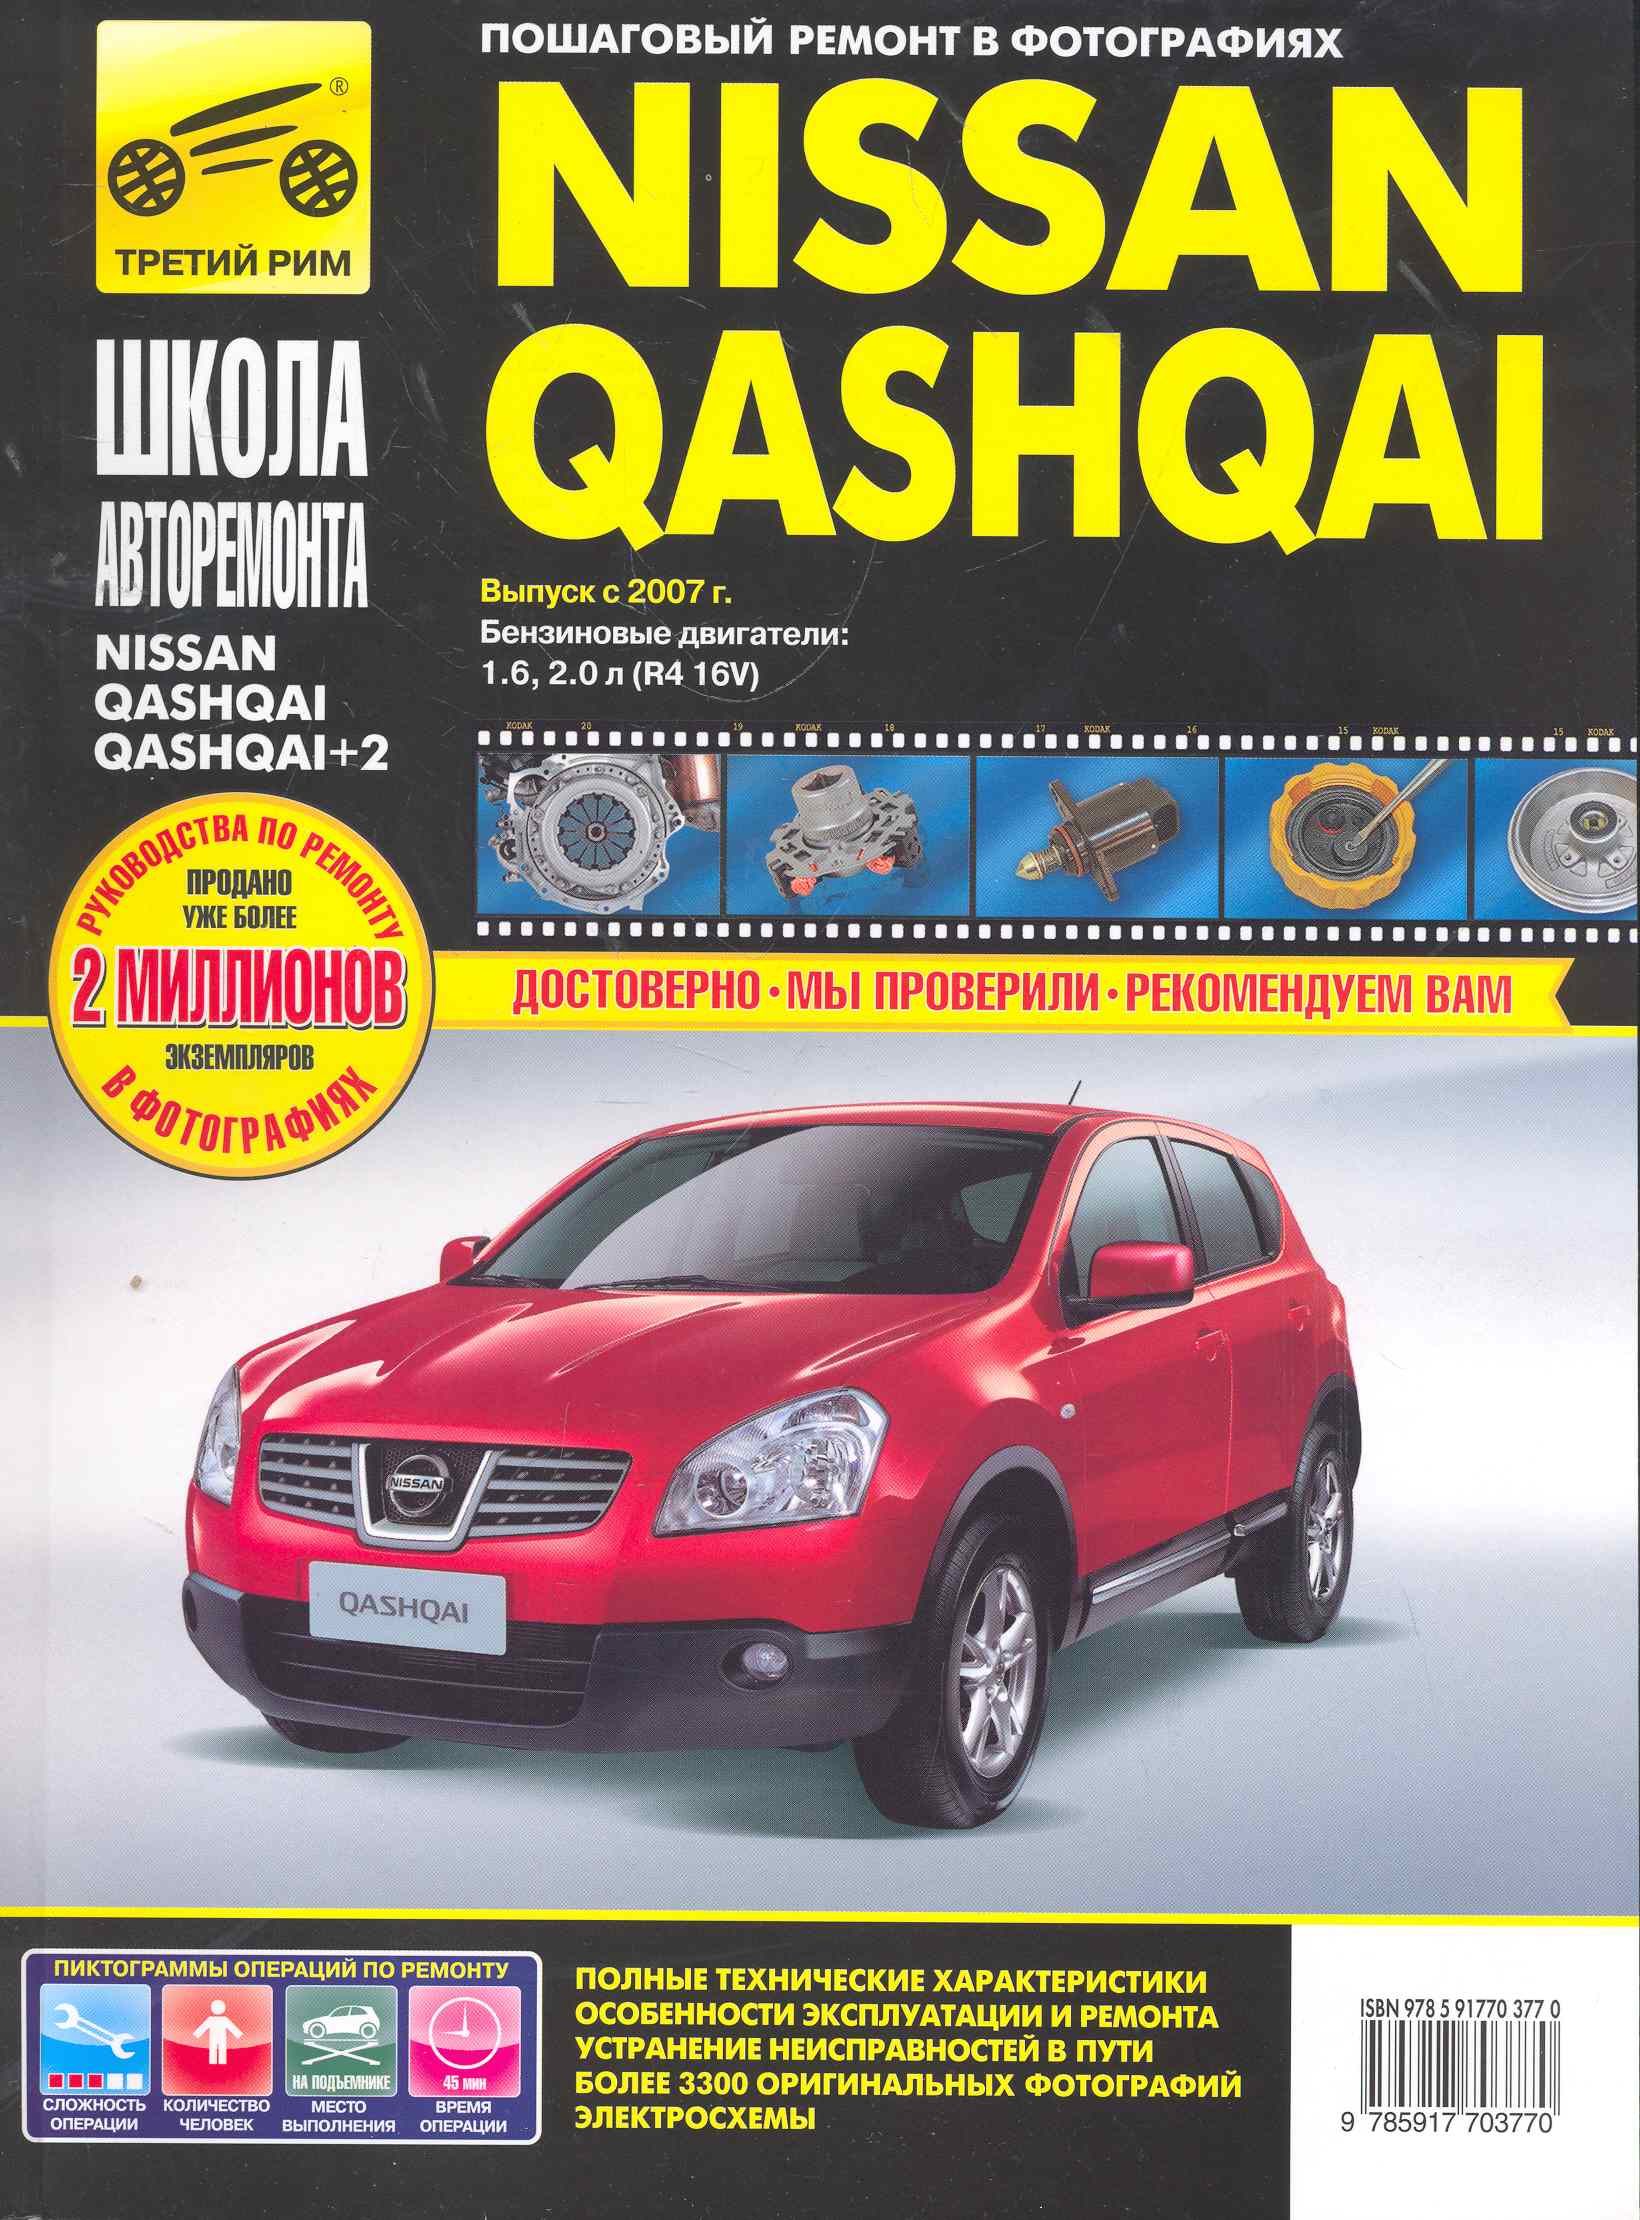 nissan almera classic с 2005 г бенз дв 1 6 цв фото рук по рем с 2005 г Nissan Qashqai/ + 2 с 2007 г. бенз. дв. 1.6 2.0 ч/б фото рук. по рем.//с 2007 г.//